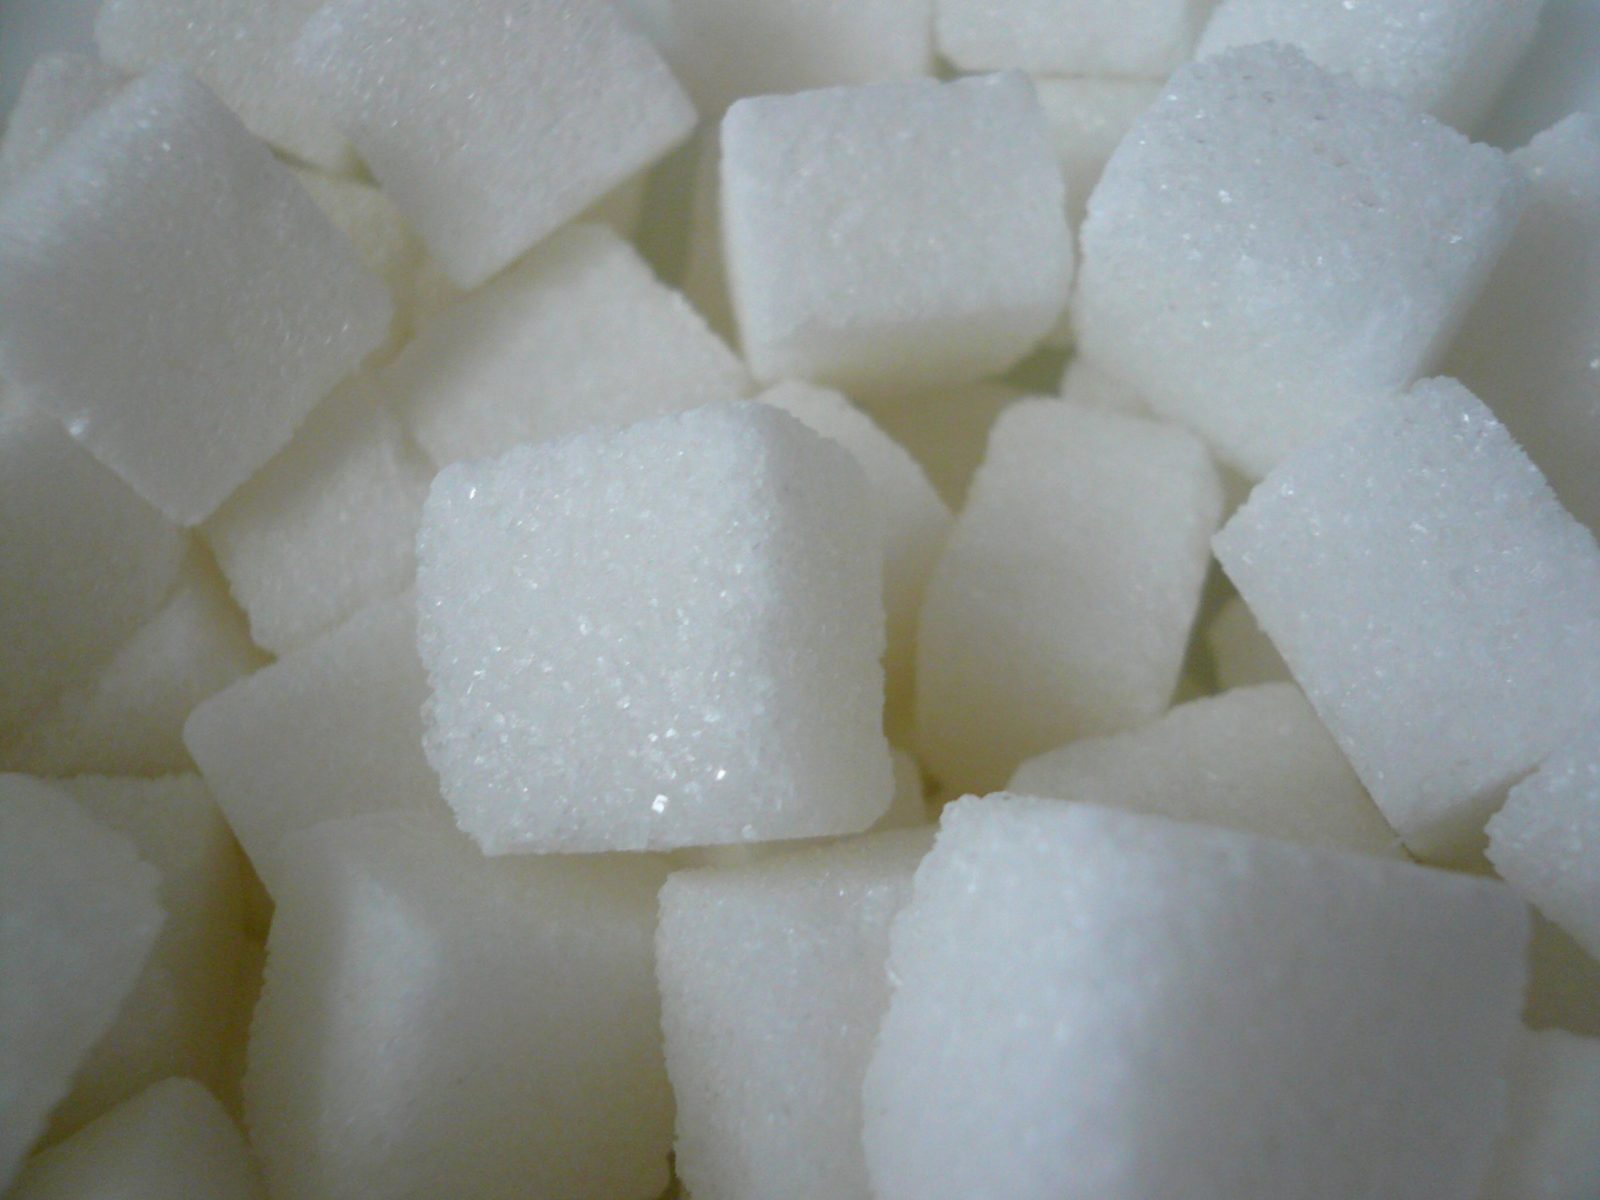 Sugar Heart Disease | Sugar Bladder Cancer | Sugar Industry Suppressed Research